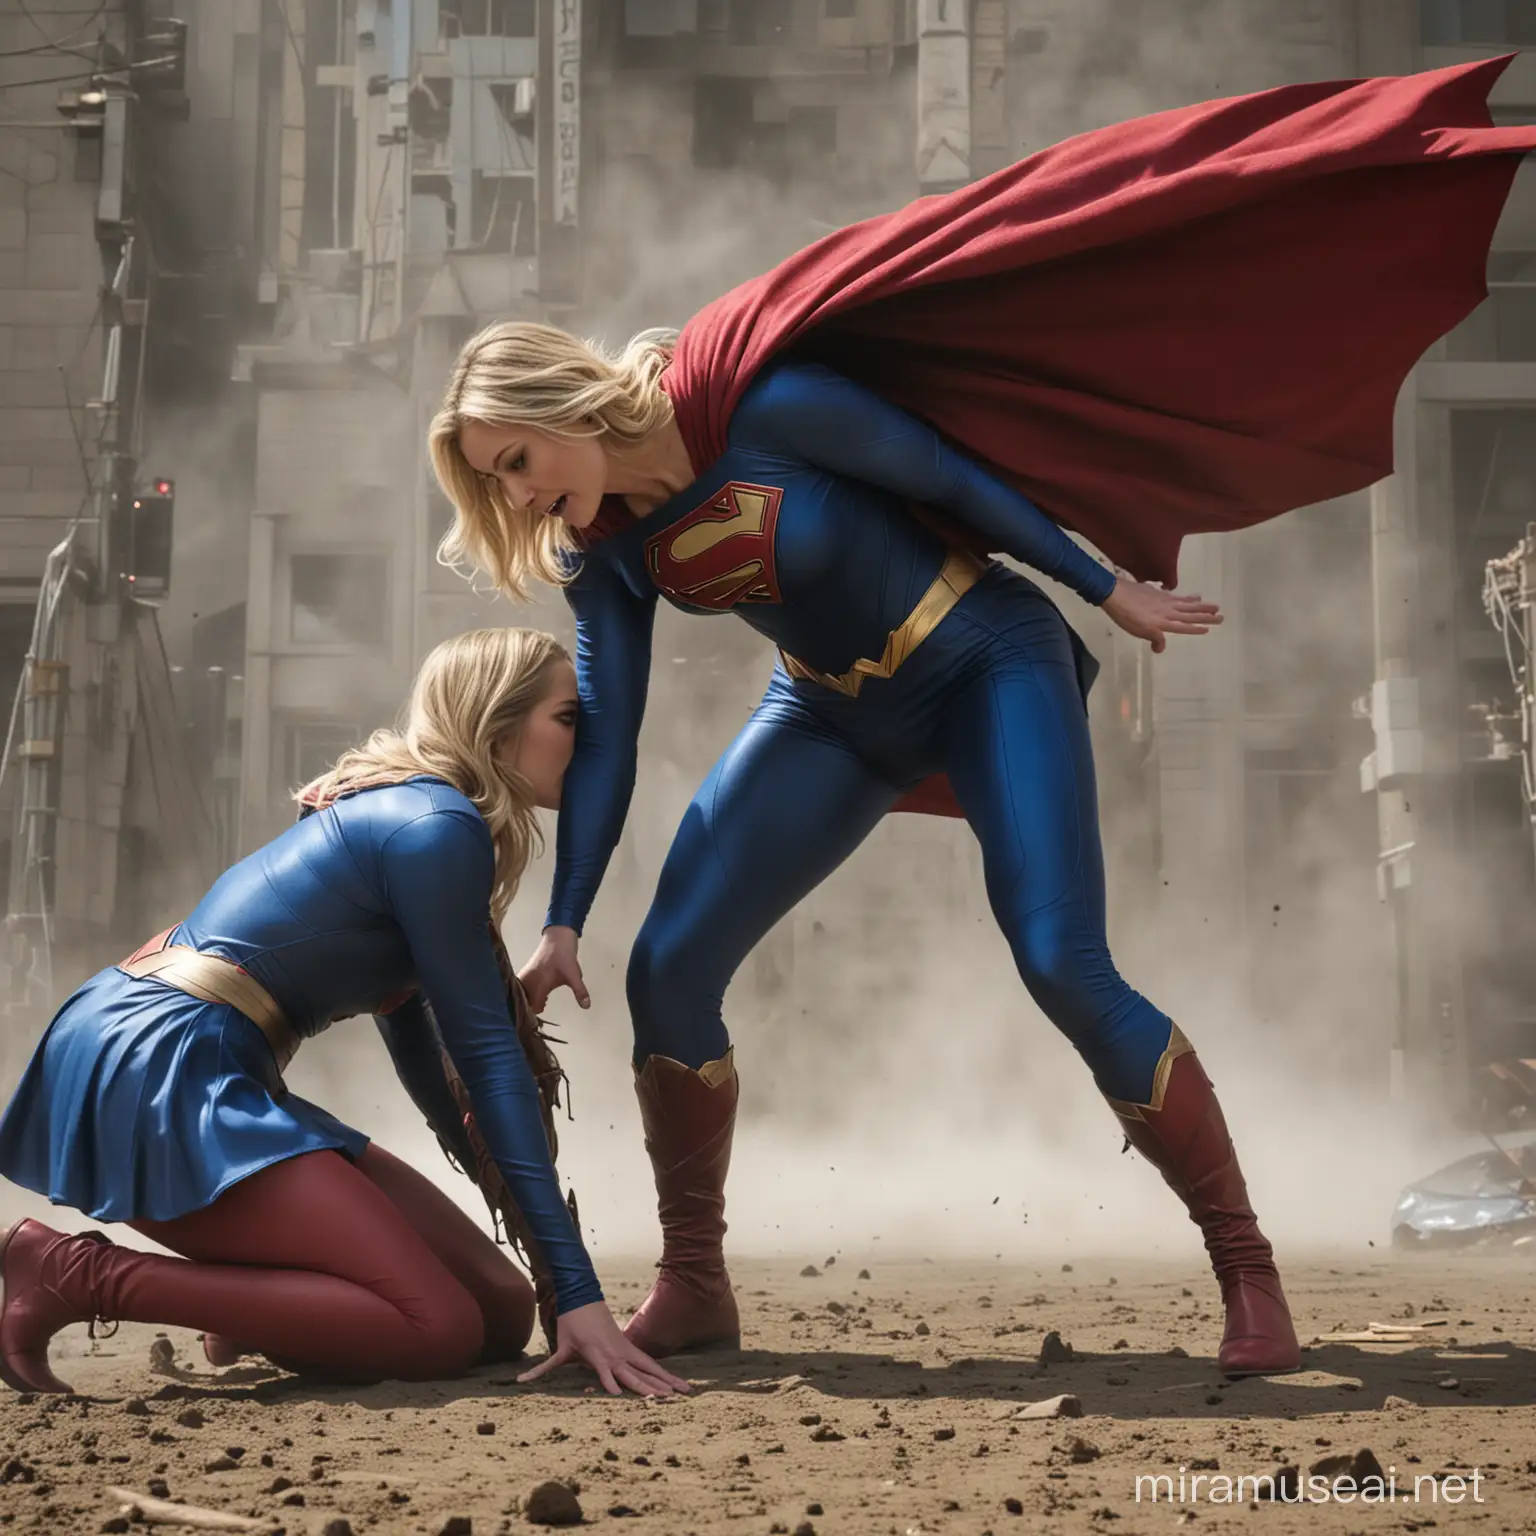 Supergirl Confronts Giant Arachnid in Superman Costume